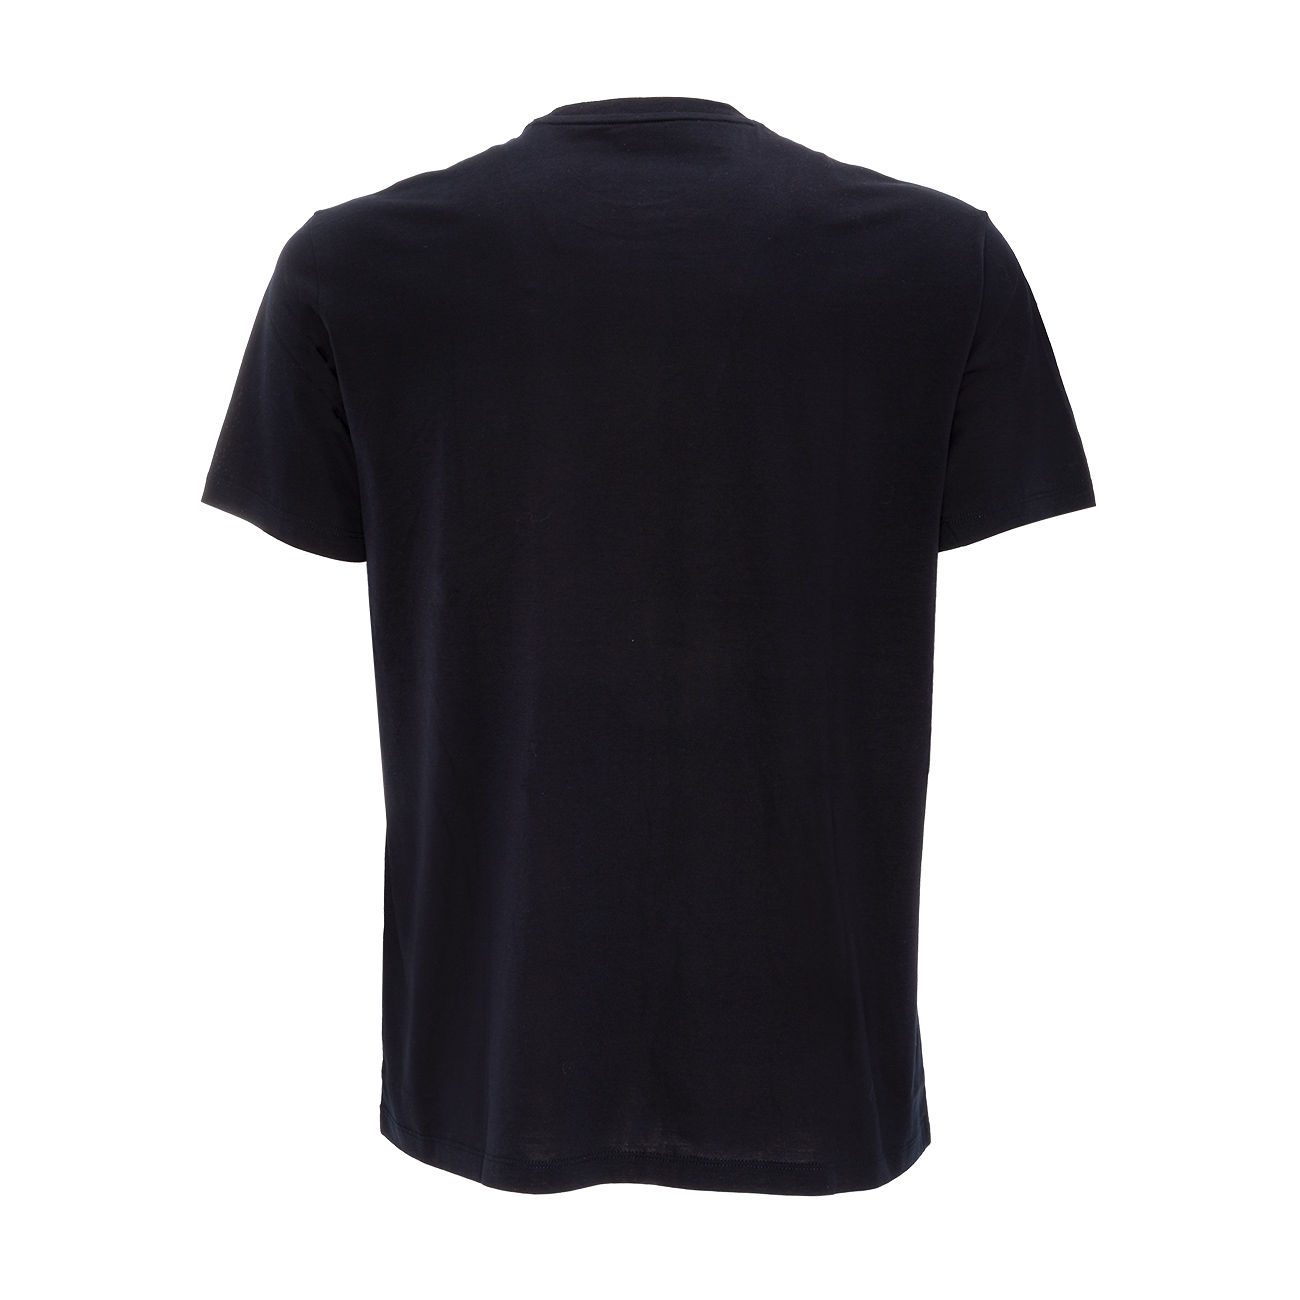 Armani Exchange chest logo polo shirt in navy